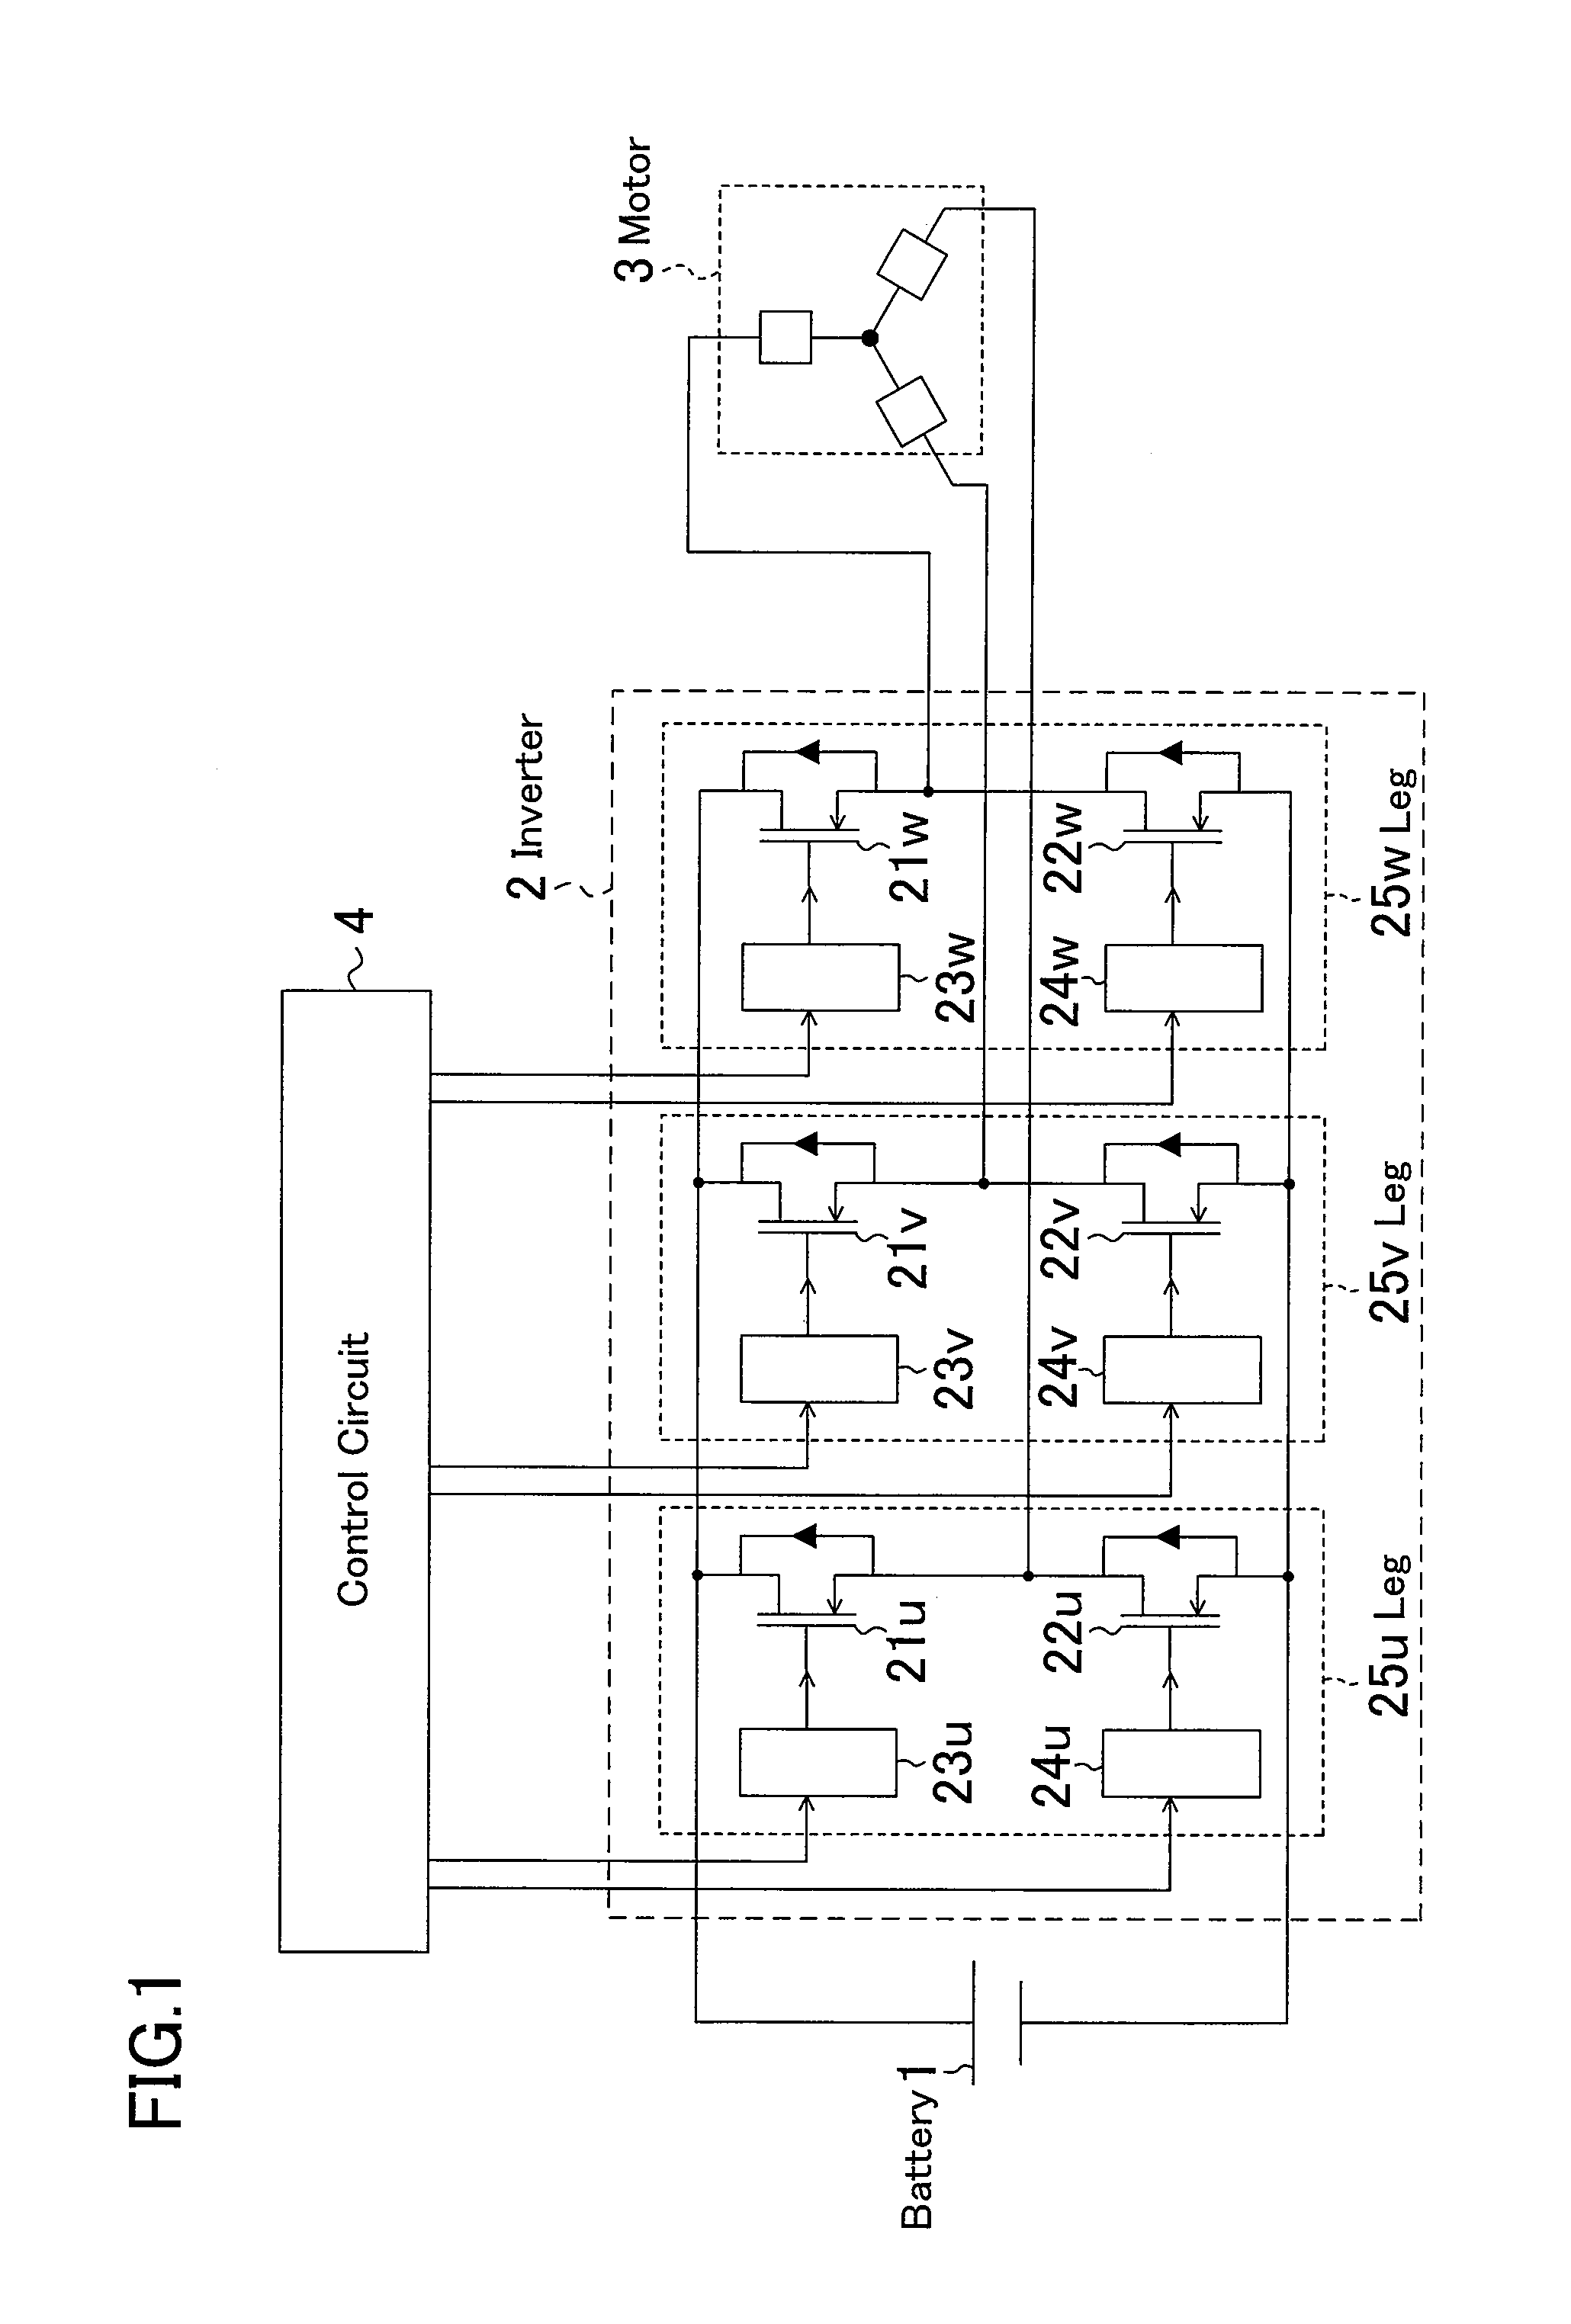 Power conversion circuit having off-voltage control circuit